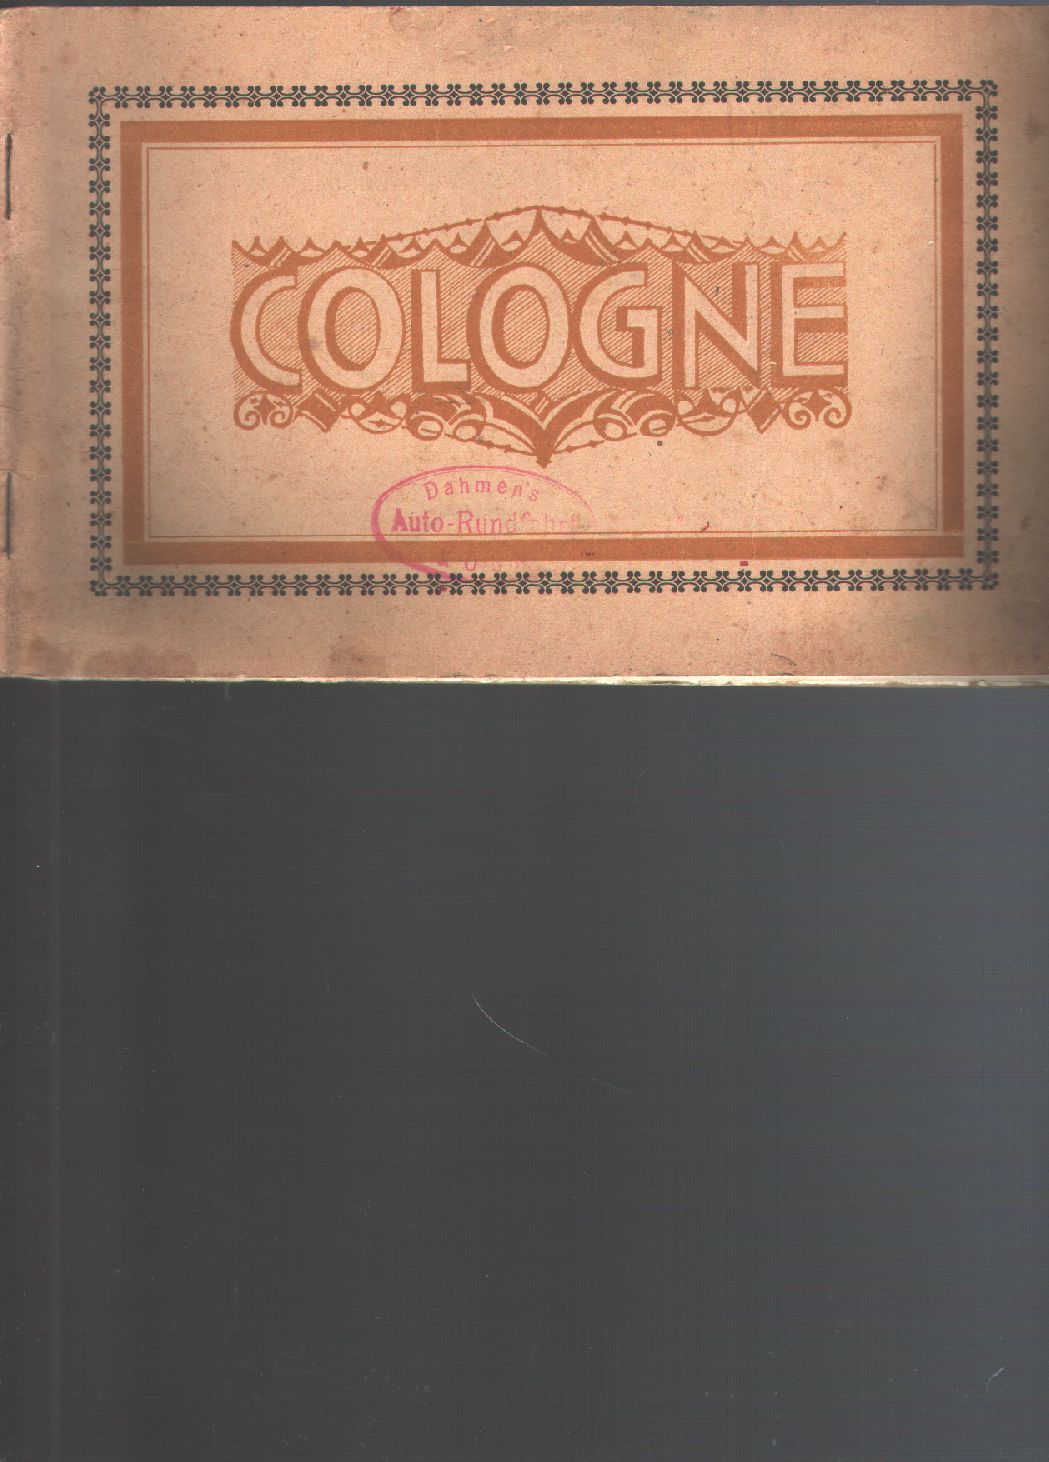 "."  Cologne 